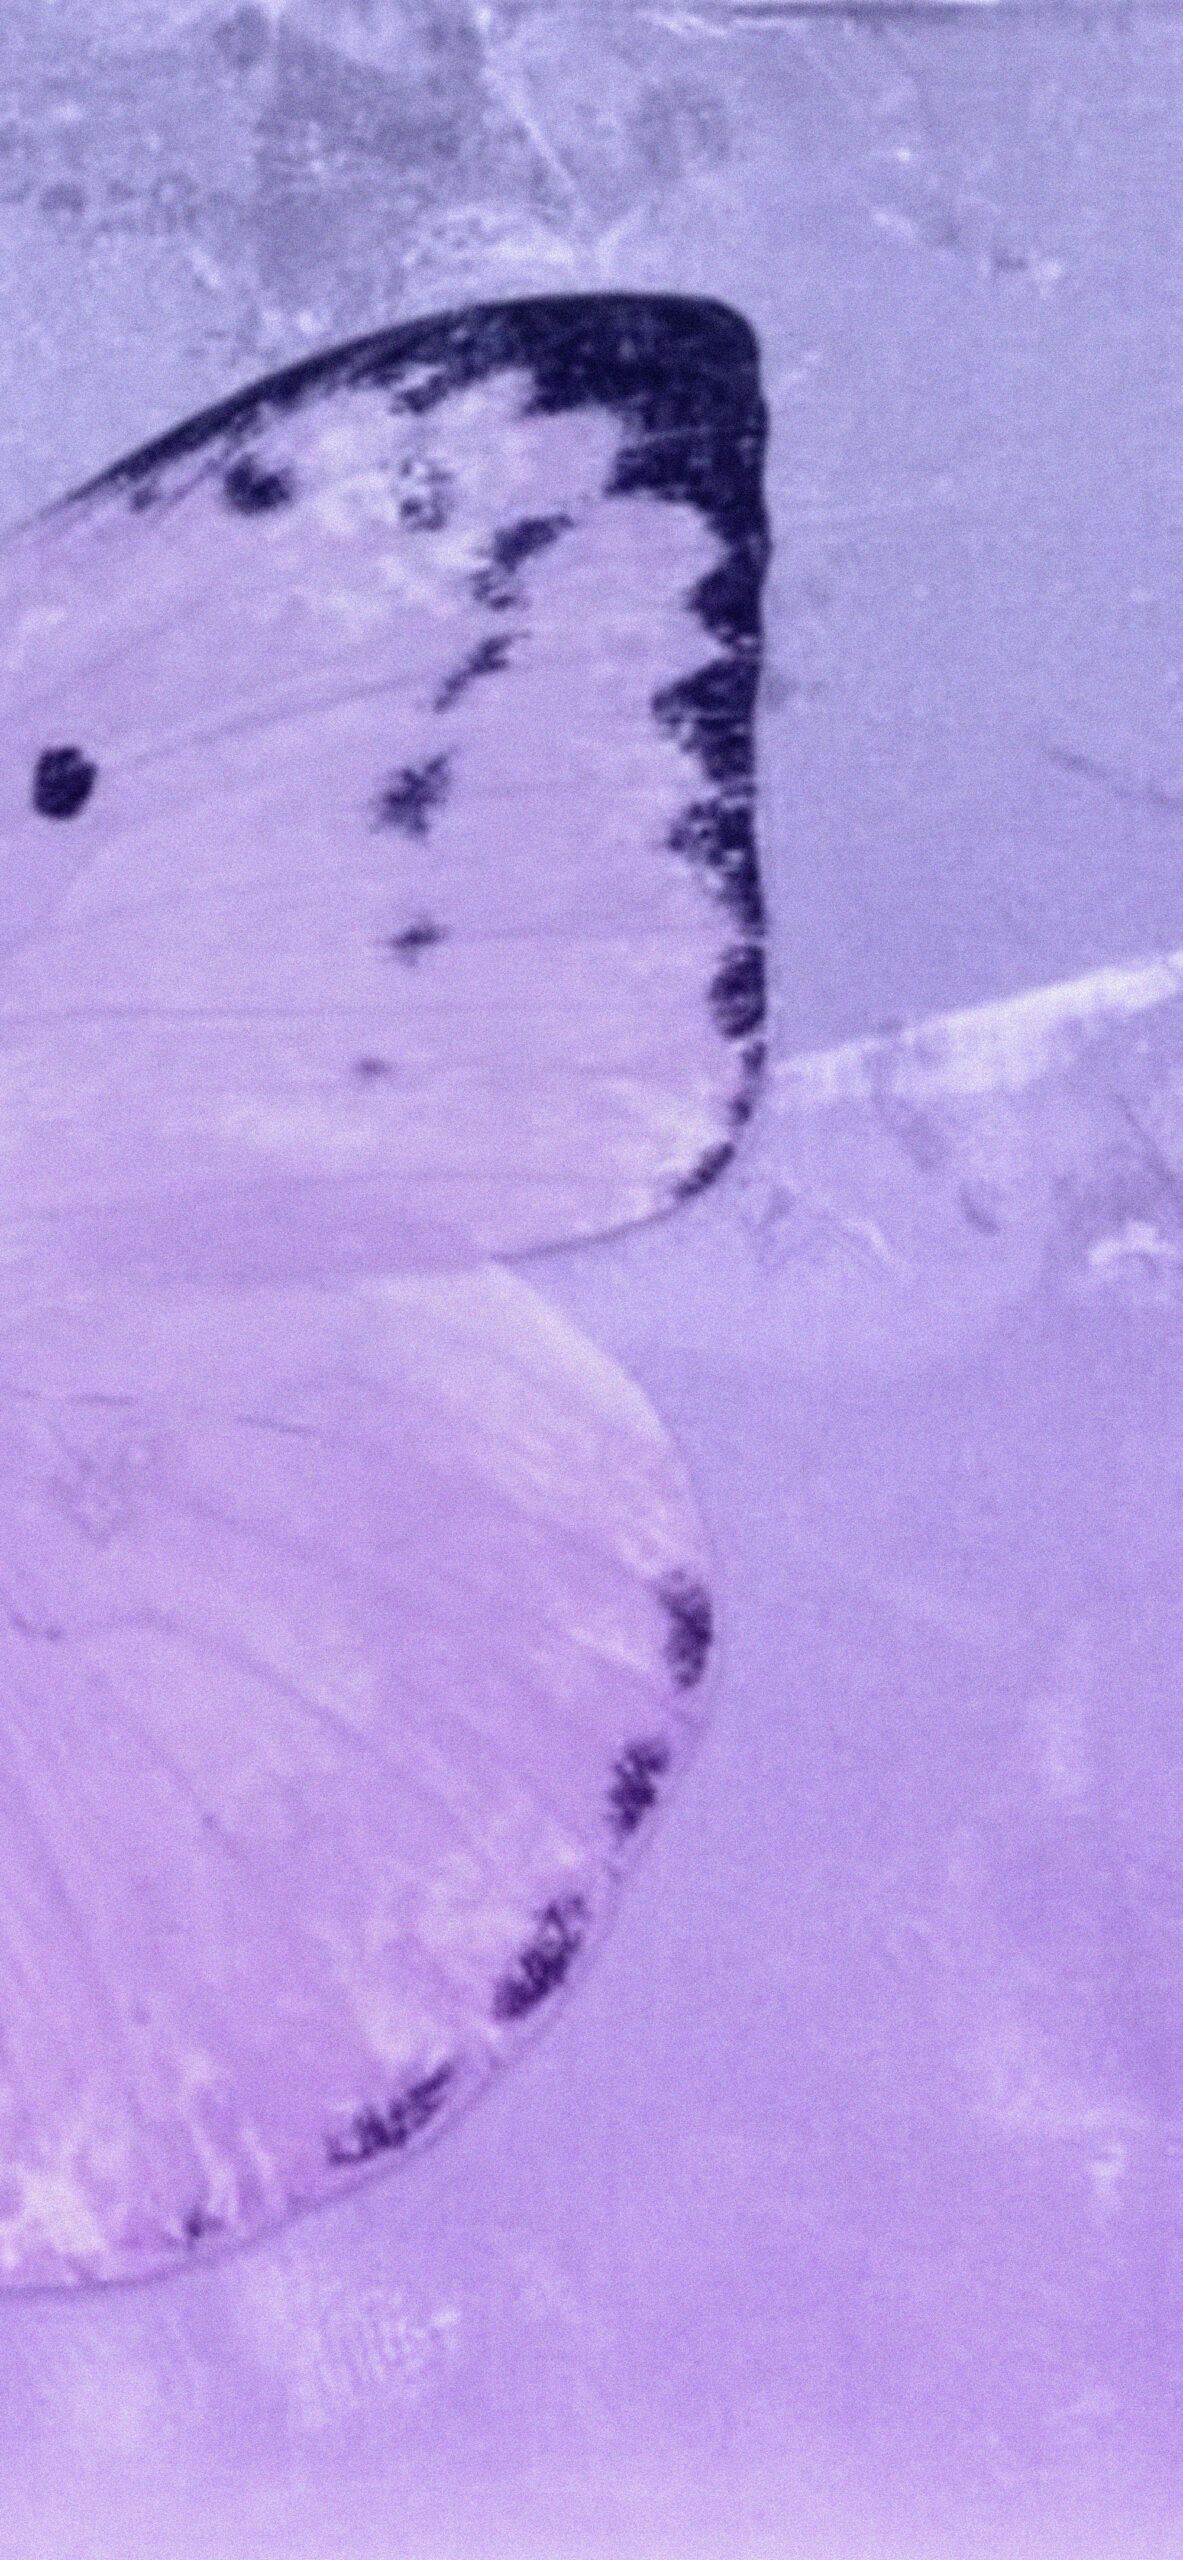 A purple butterfly with black spots on it - Light purple, purple, lavender, violet, pastel purple